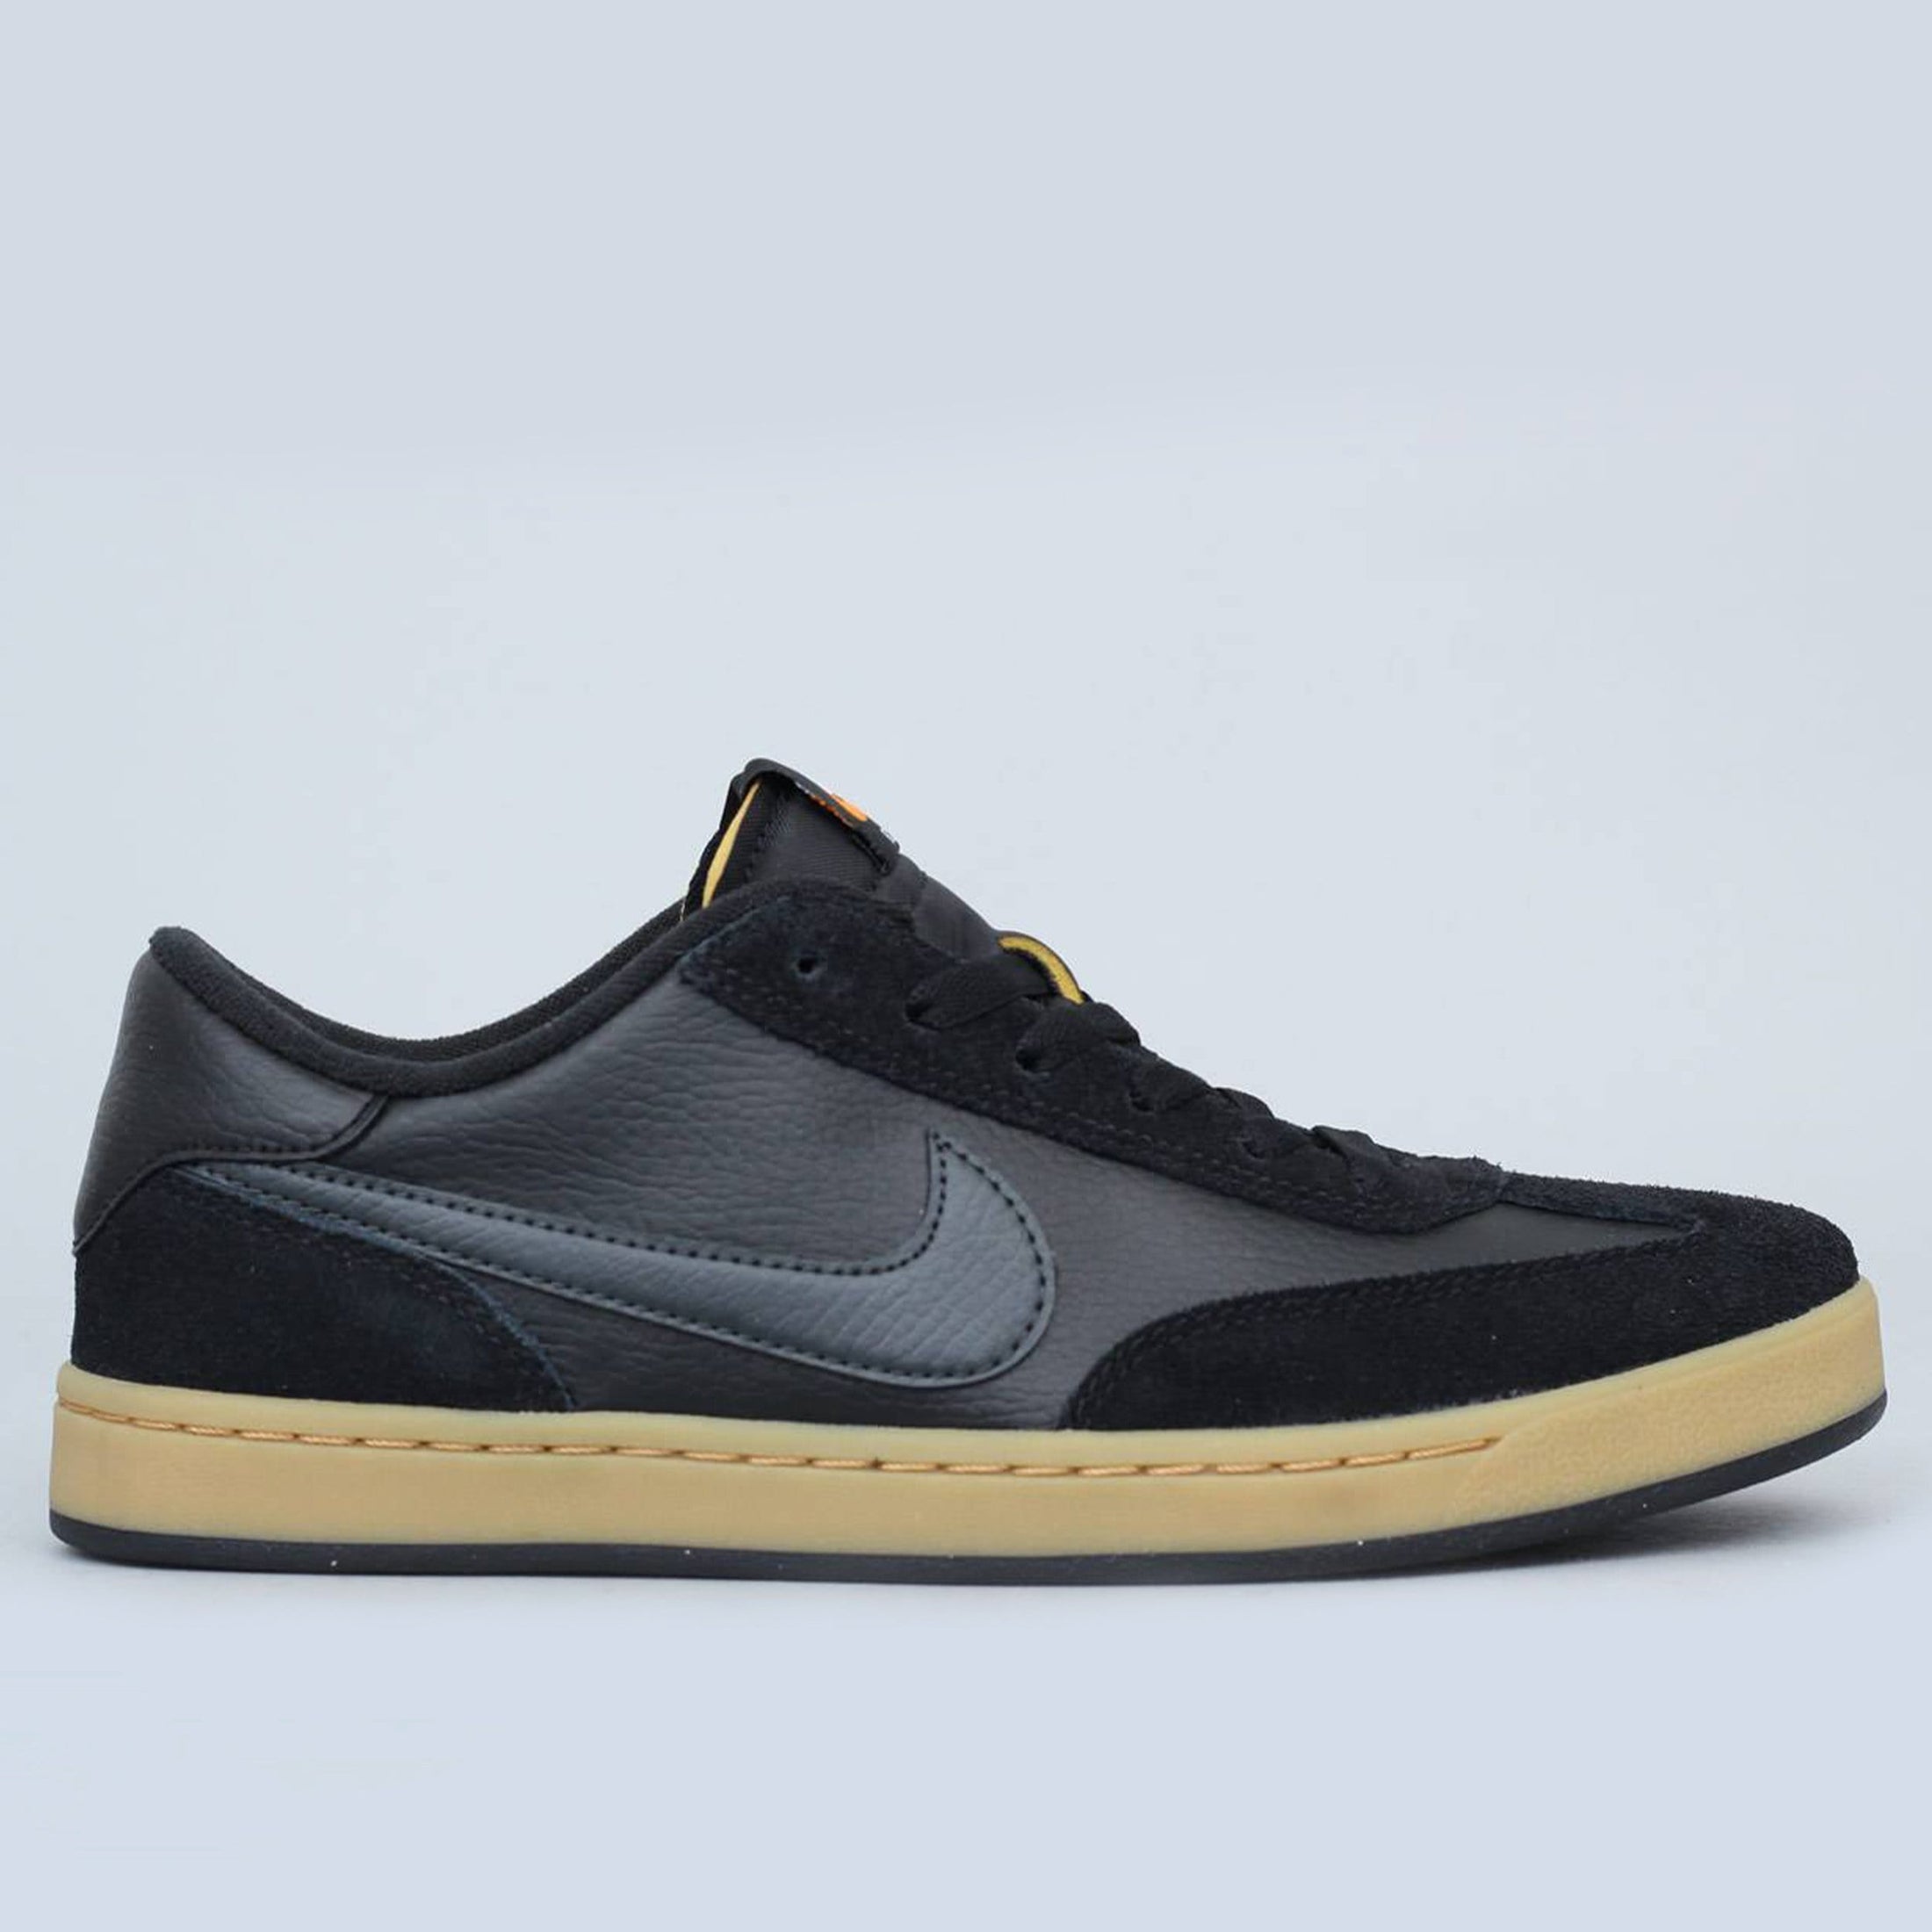 Nike SB FC Classic Shoes Black / Anthracite - Black